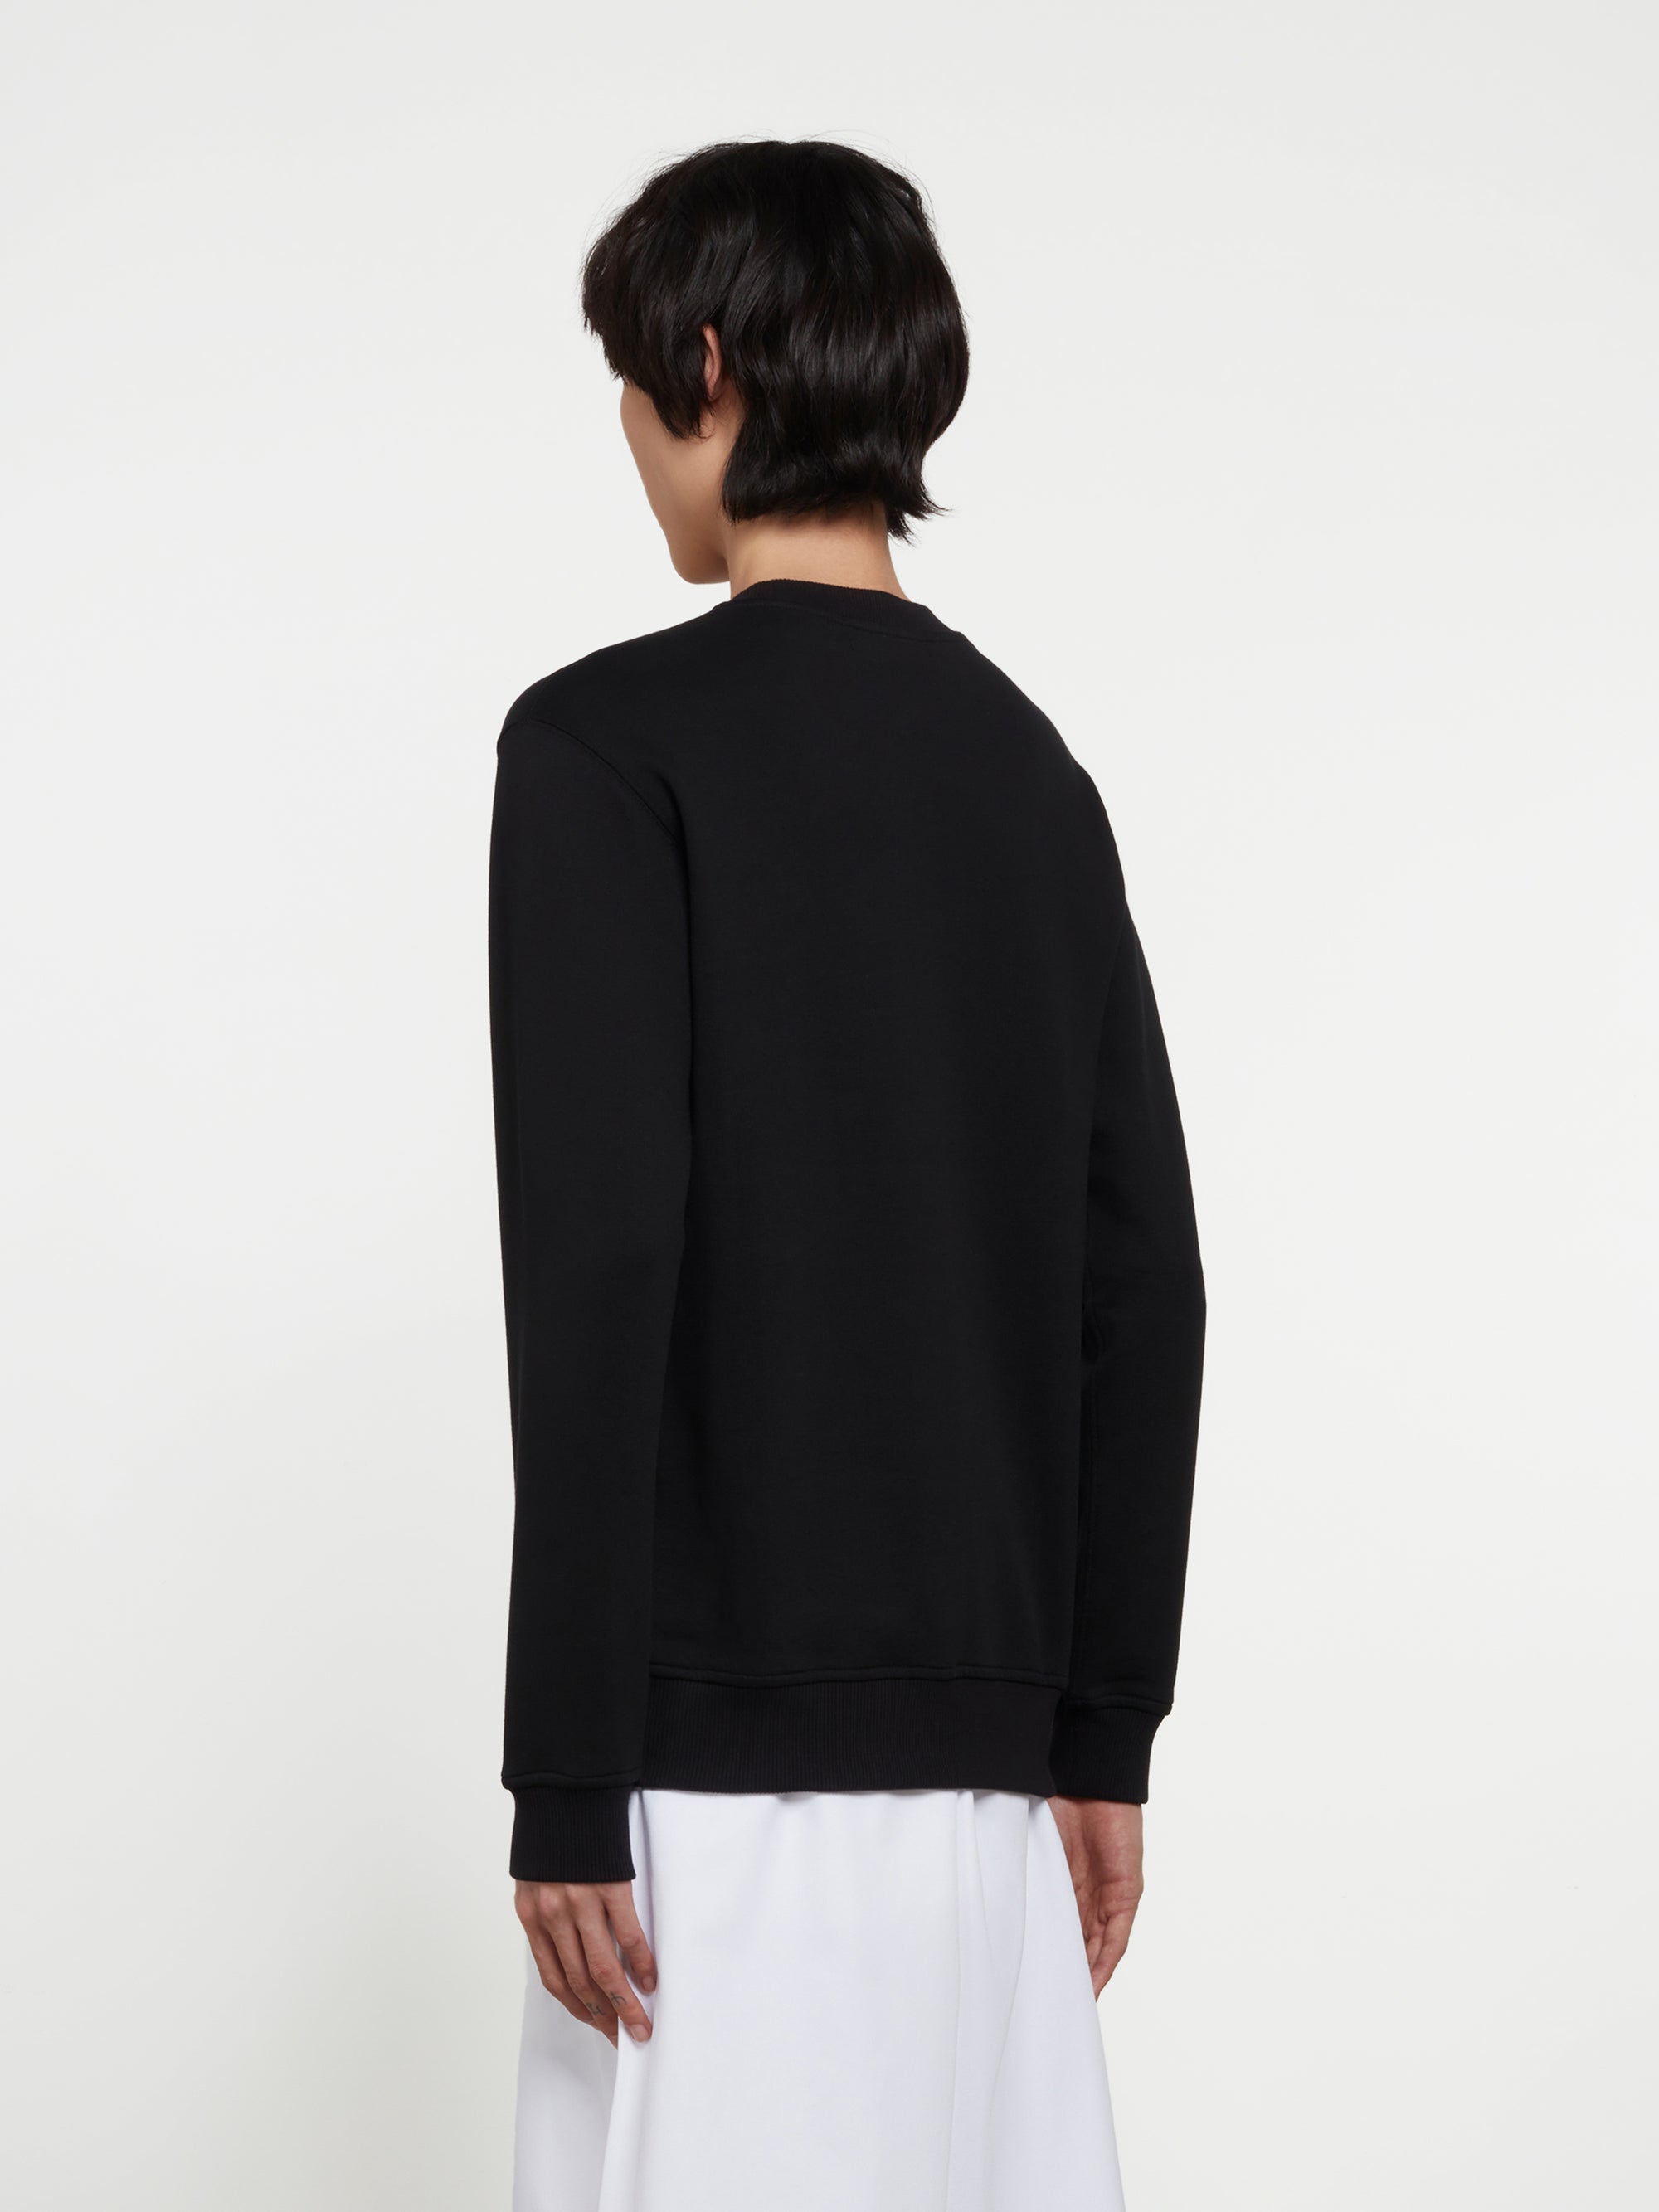 CDG Shirt - Lacoste Men's Cotton Sweatshirt - (Black) view 3